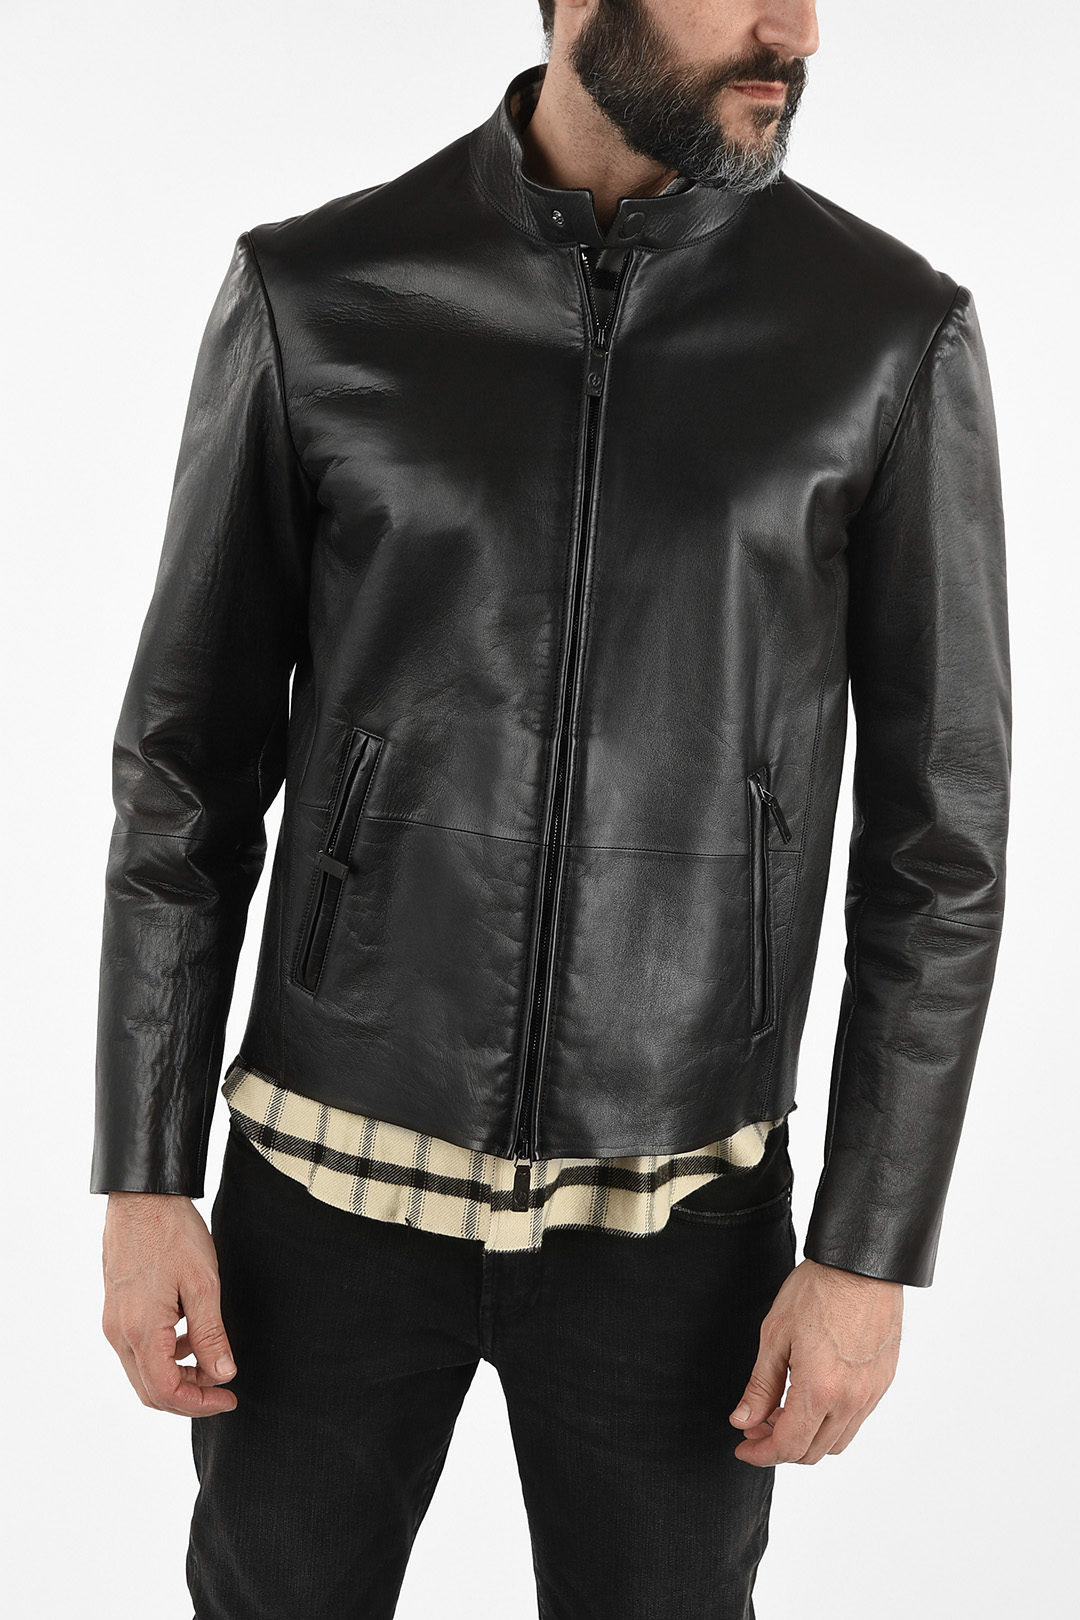 commentaar Opmerkelijk Vooraf Armani GIORGIO ARMANI Leather Jacket men - Glamood Outlet